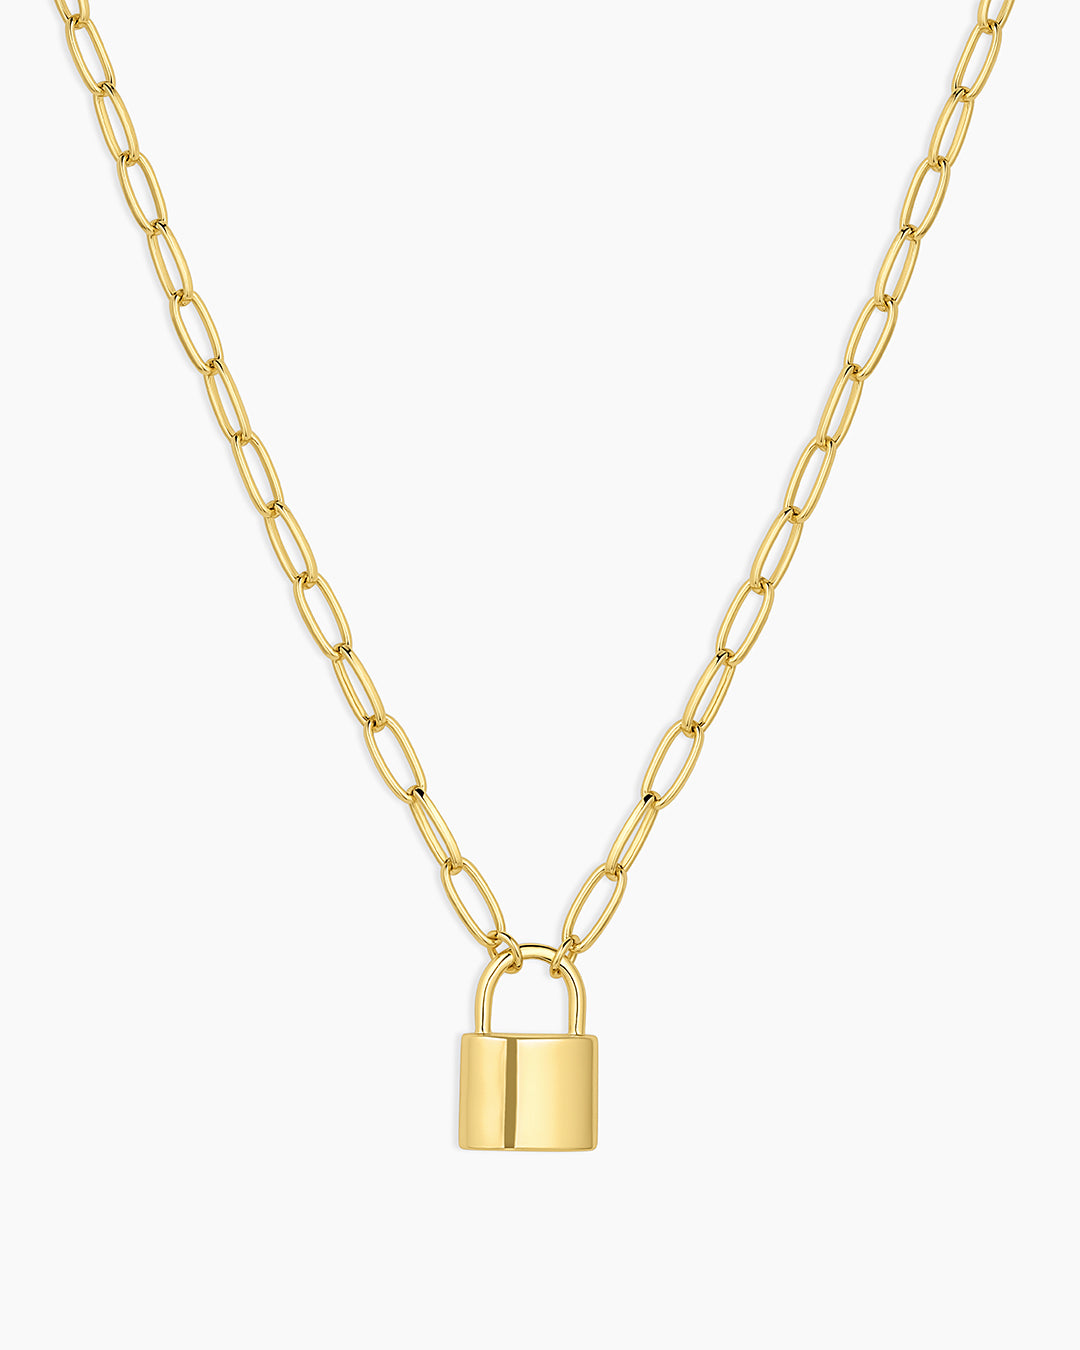 Necklaces Pendants NEW Lock Key Pendant Padlock Charm Necklace Chain Women  Jewelry Gift